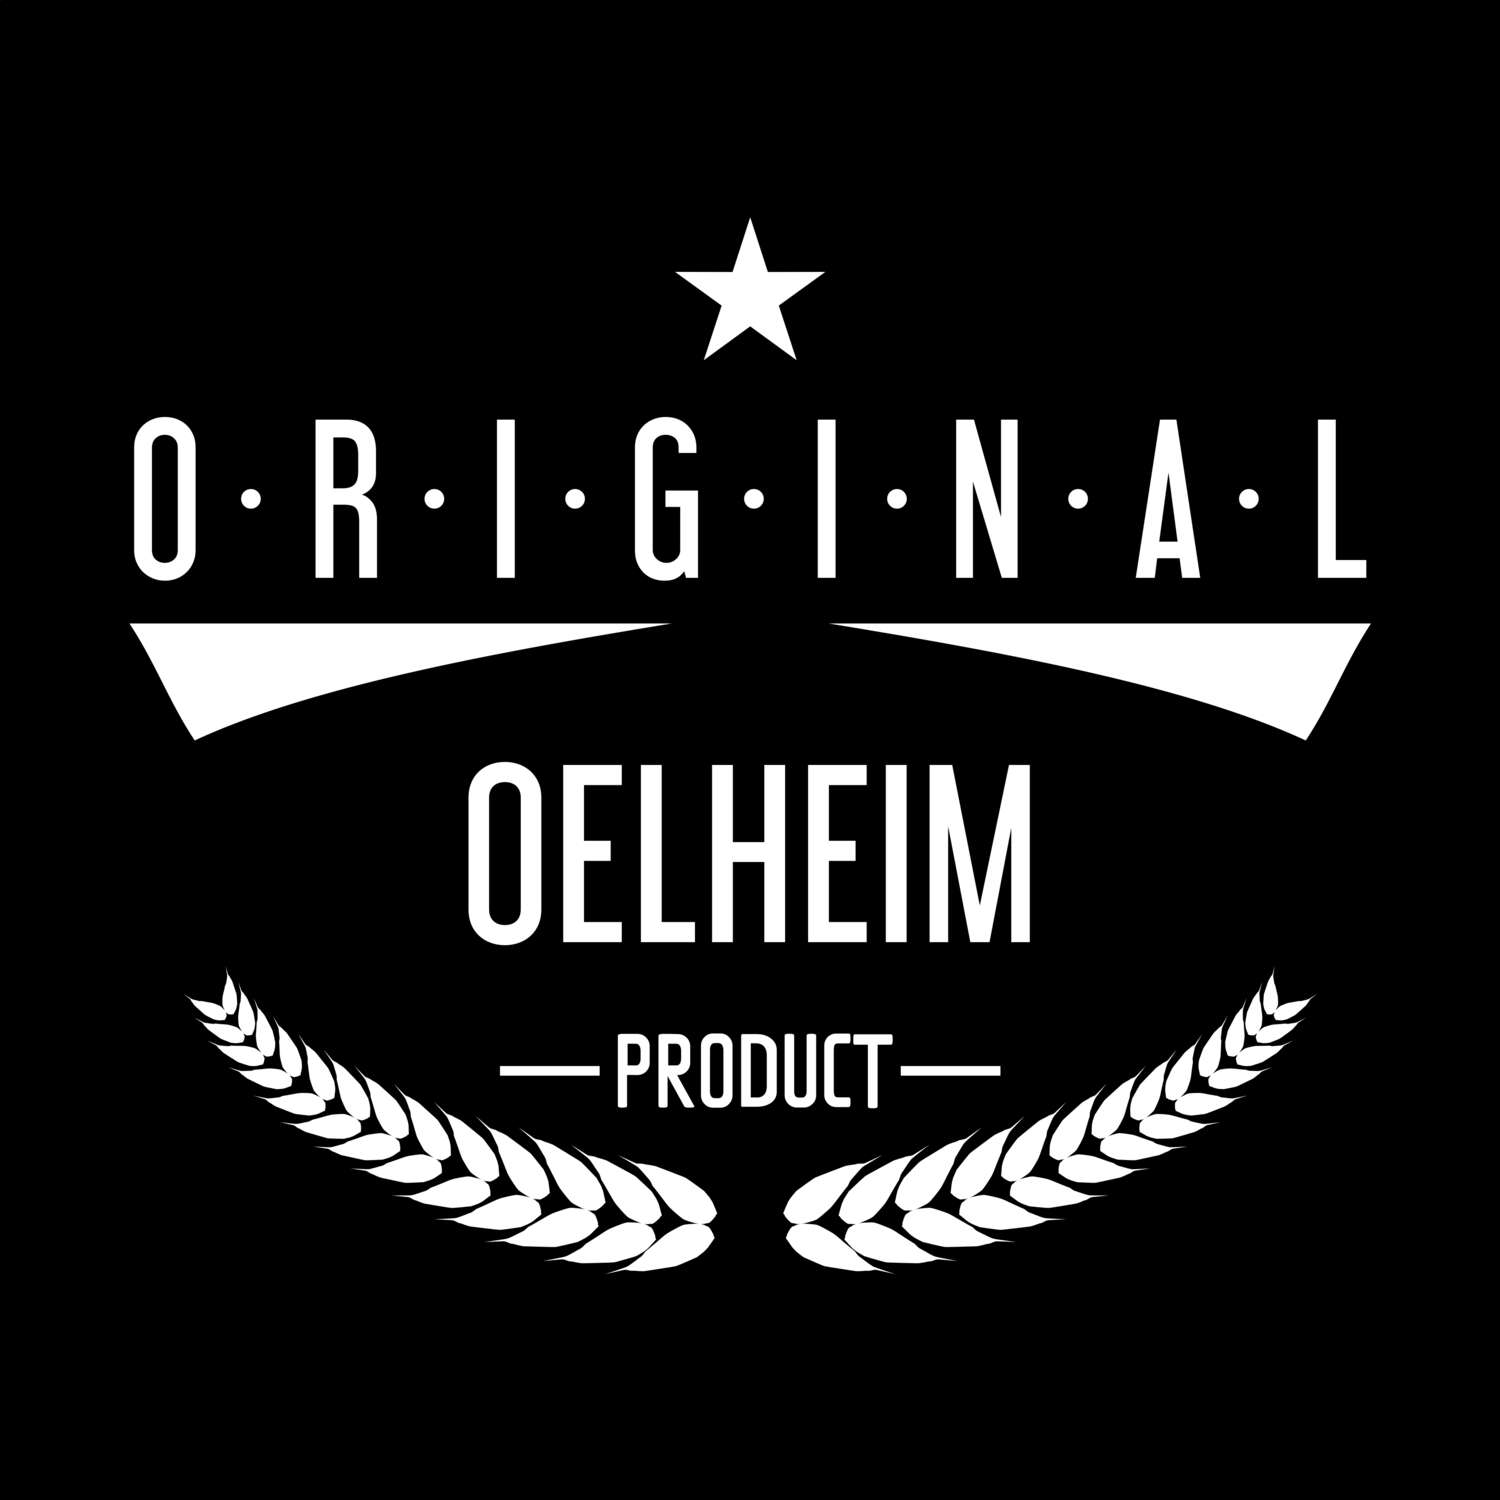 Oelheim T-Shirt »Original Product«